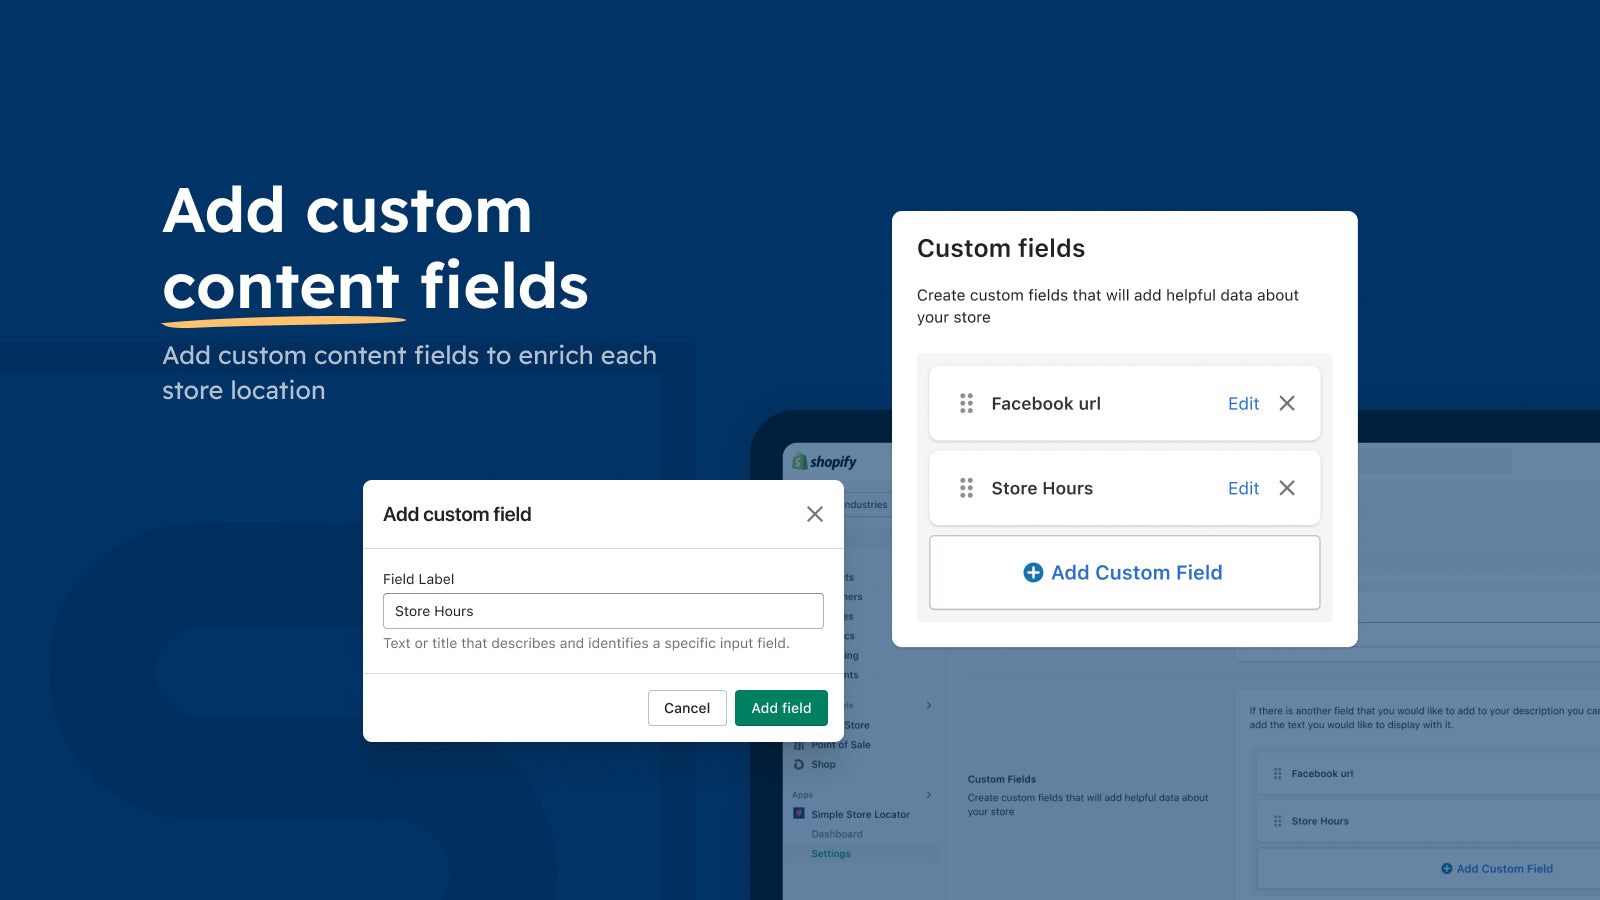 Add custom content fields